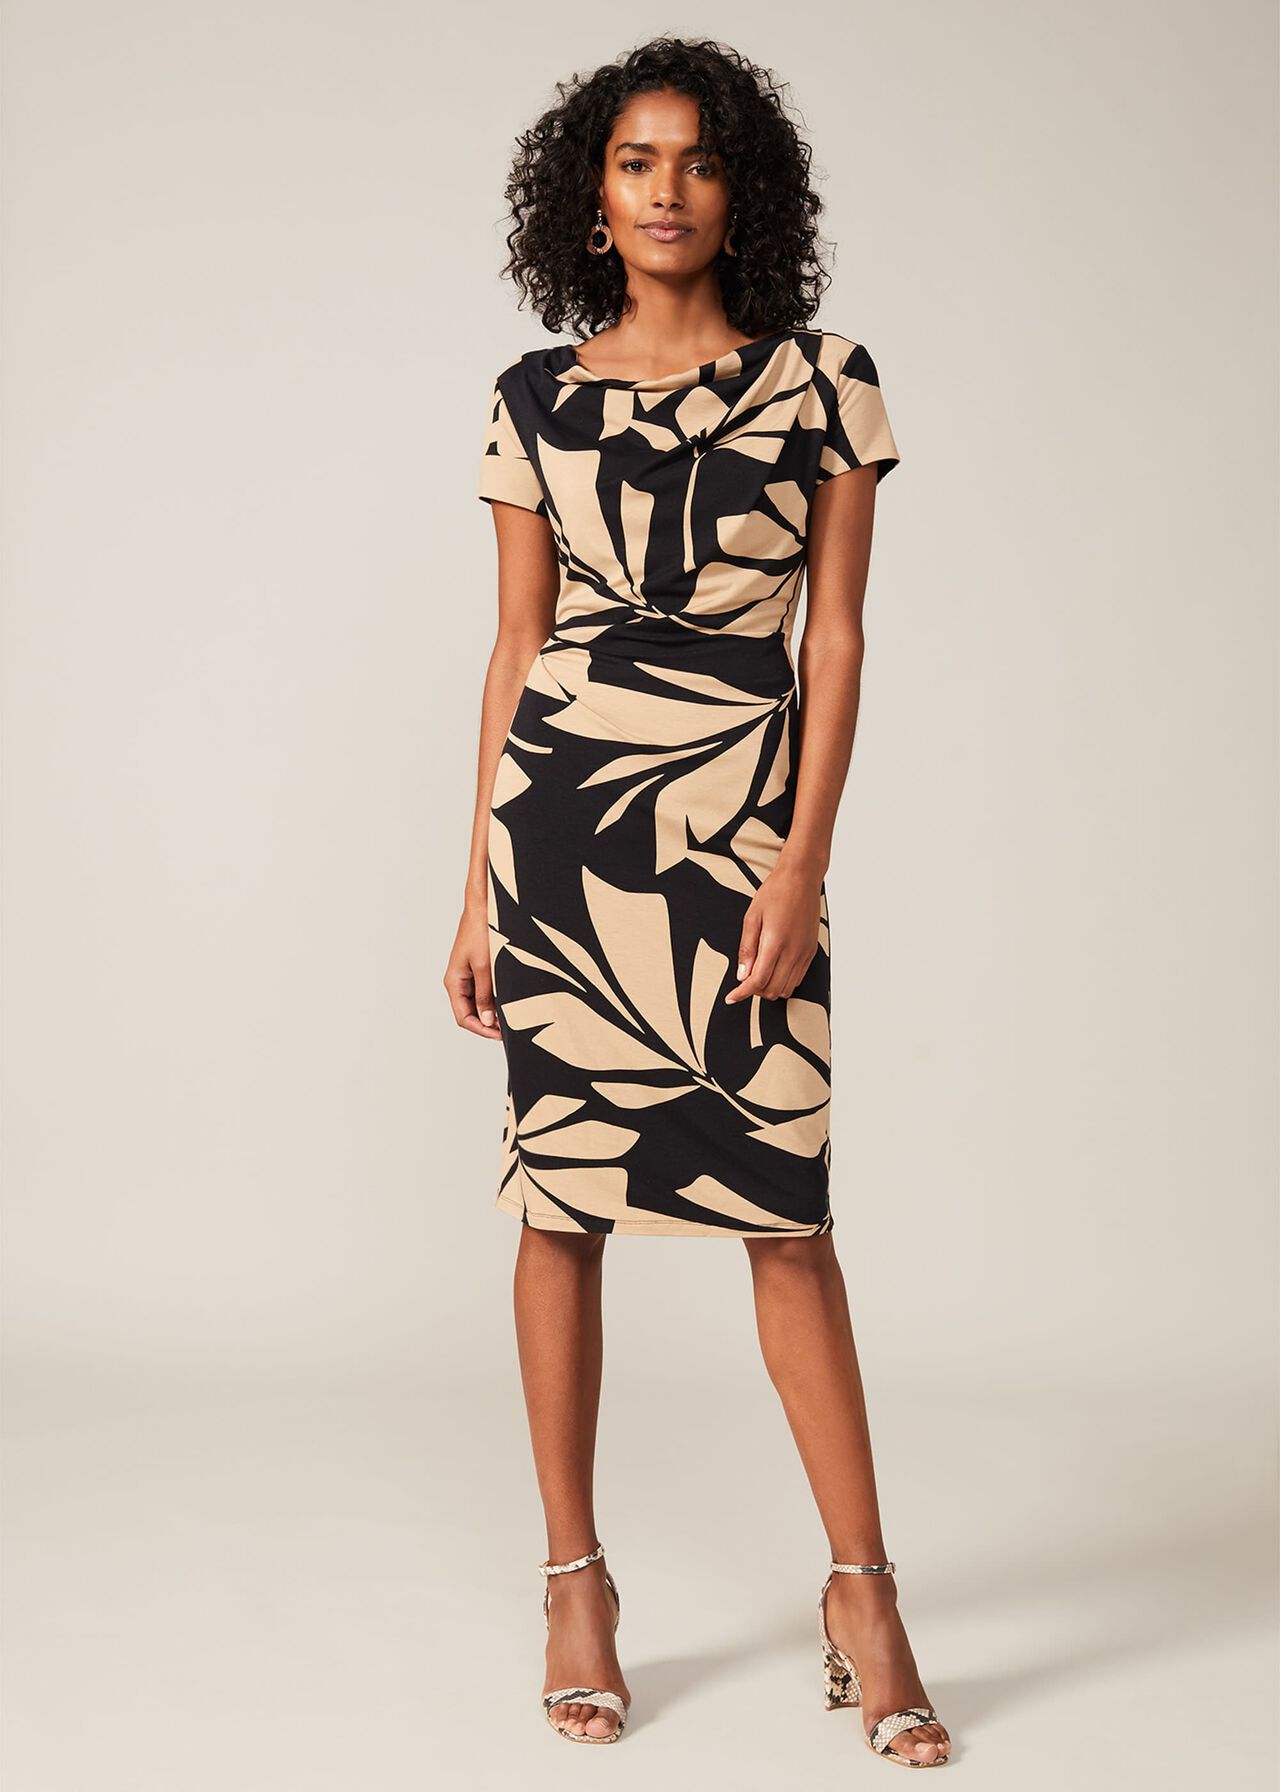 Kadia Palm Print Jersey Dress